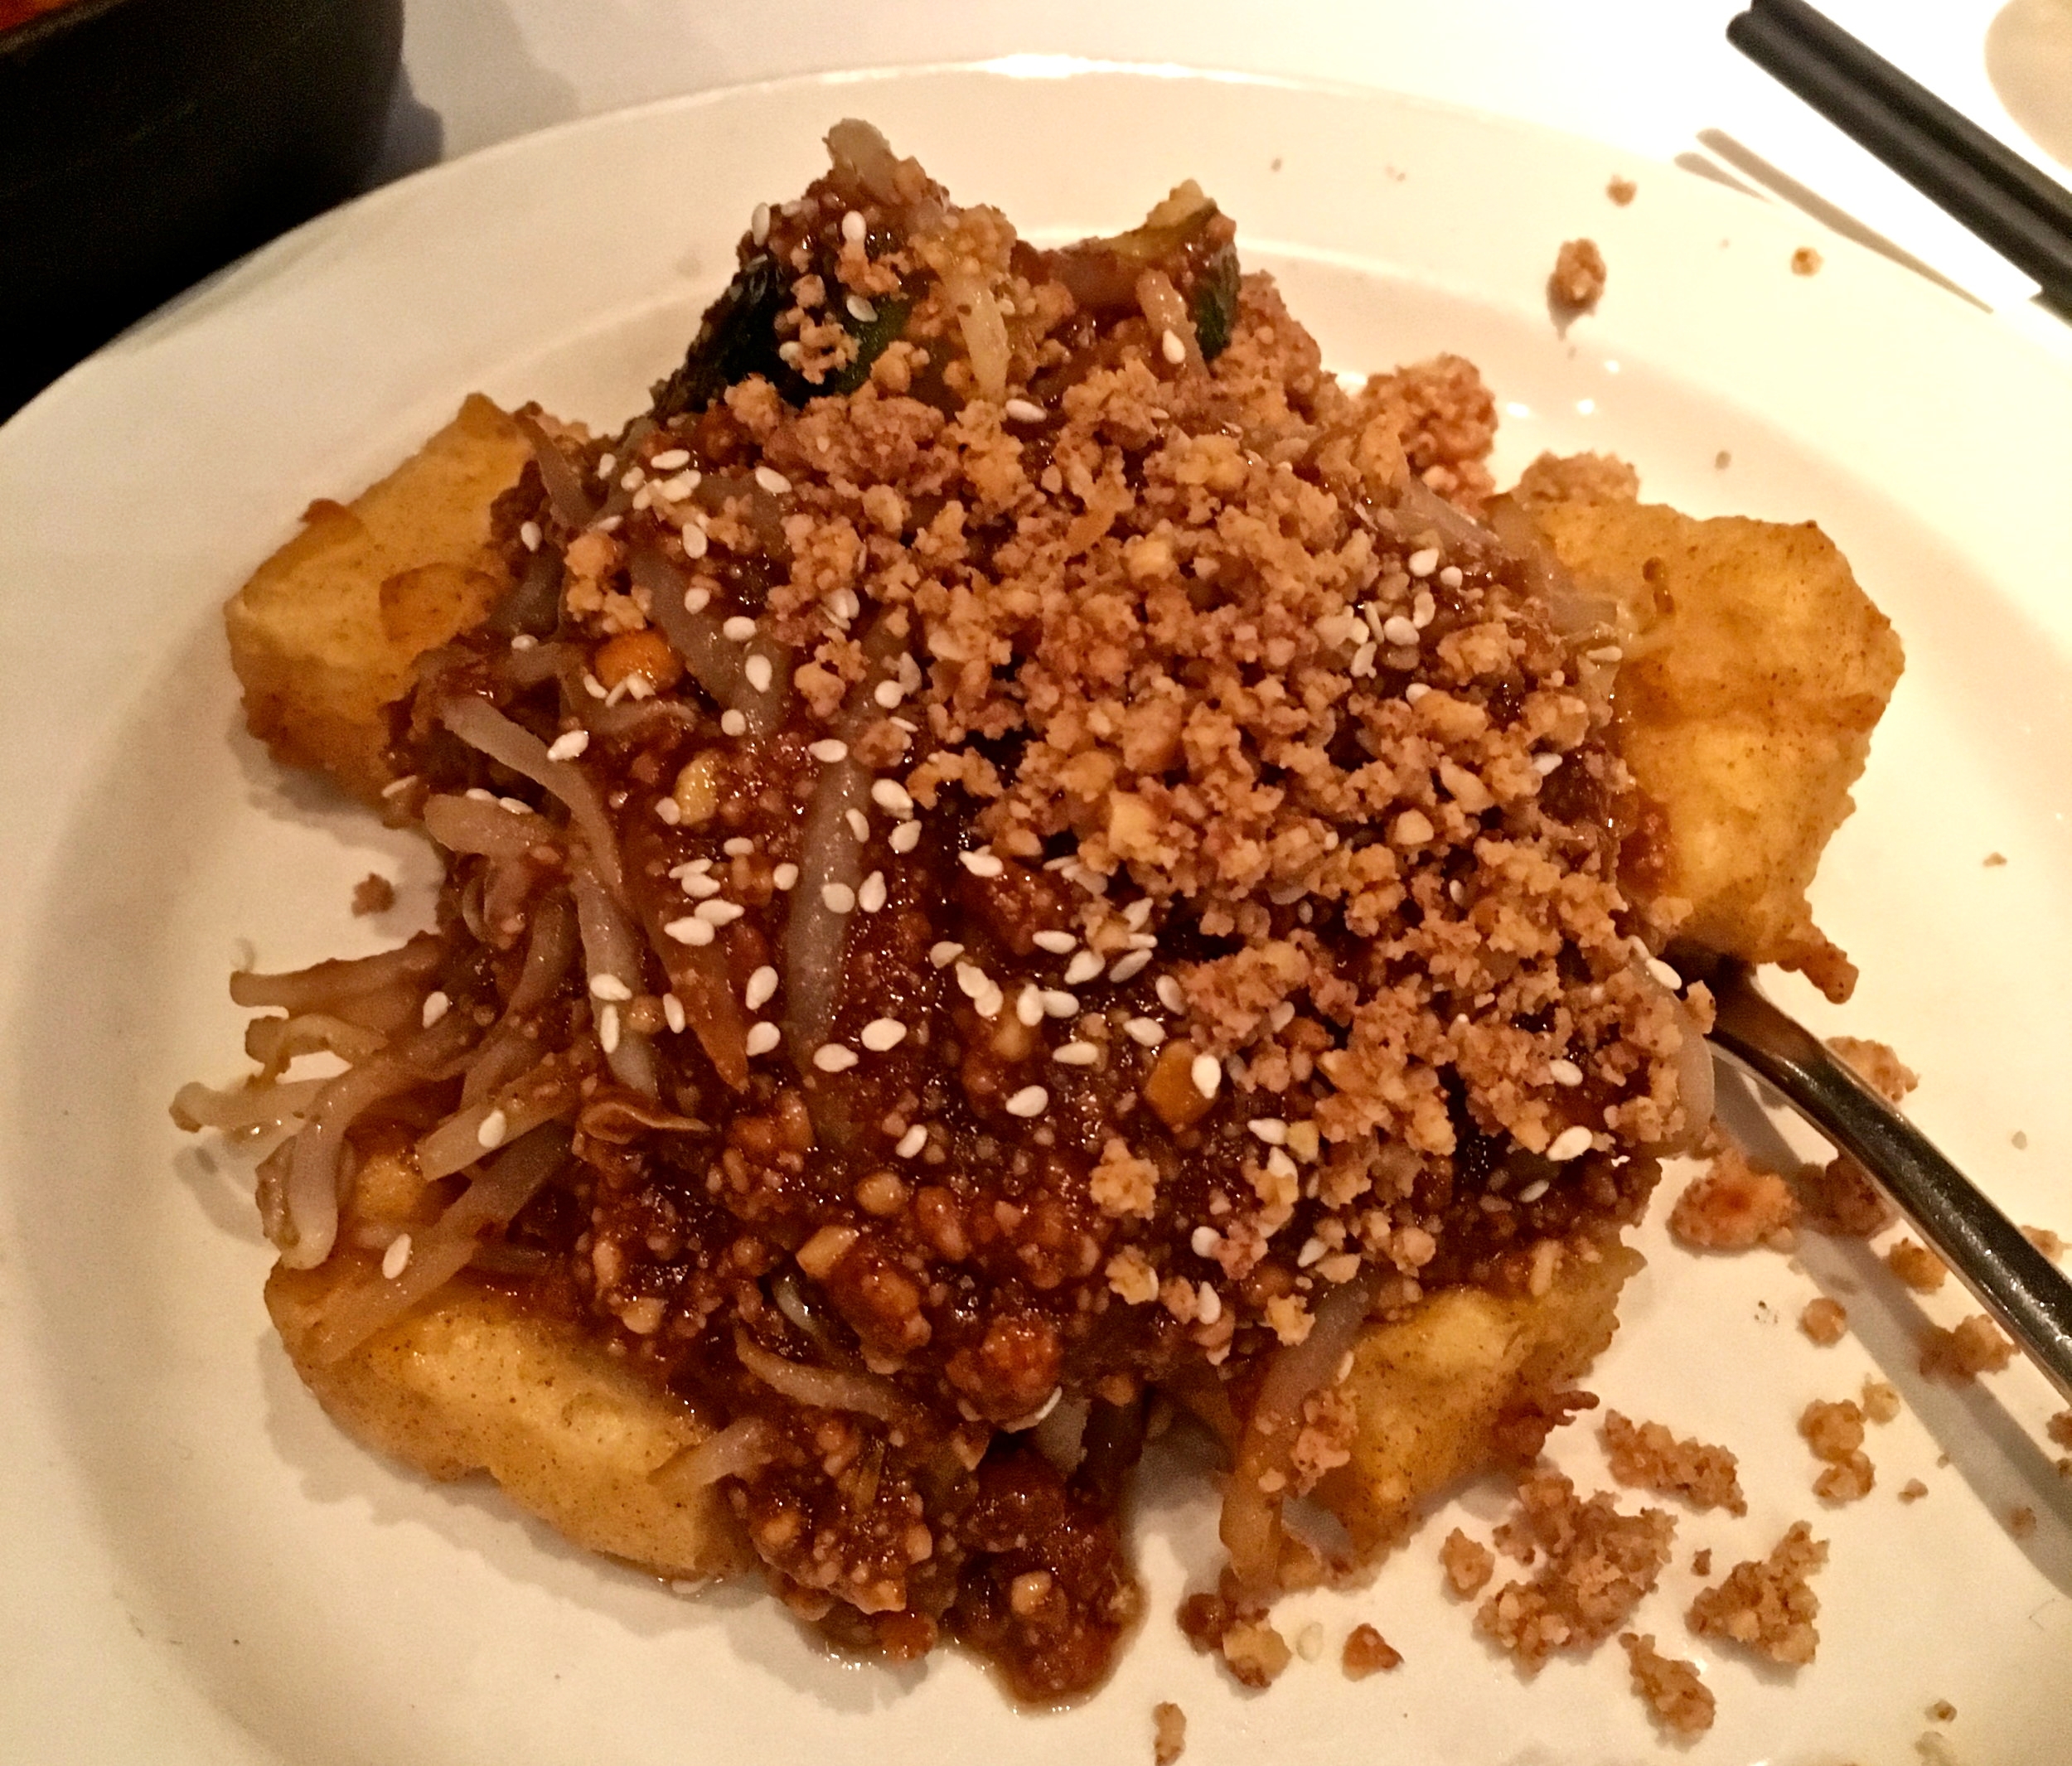 Tauhu Goreng (Fried Beancurd with Peanut Sauce)